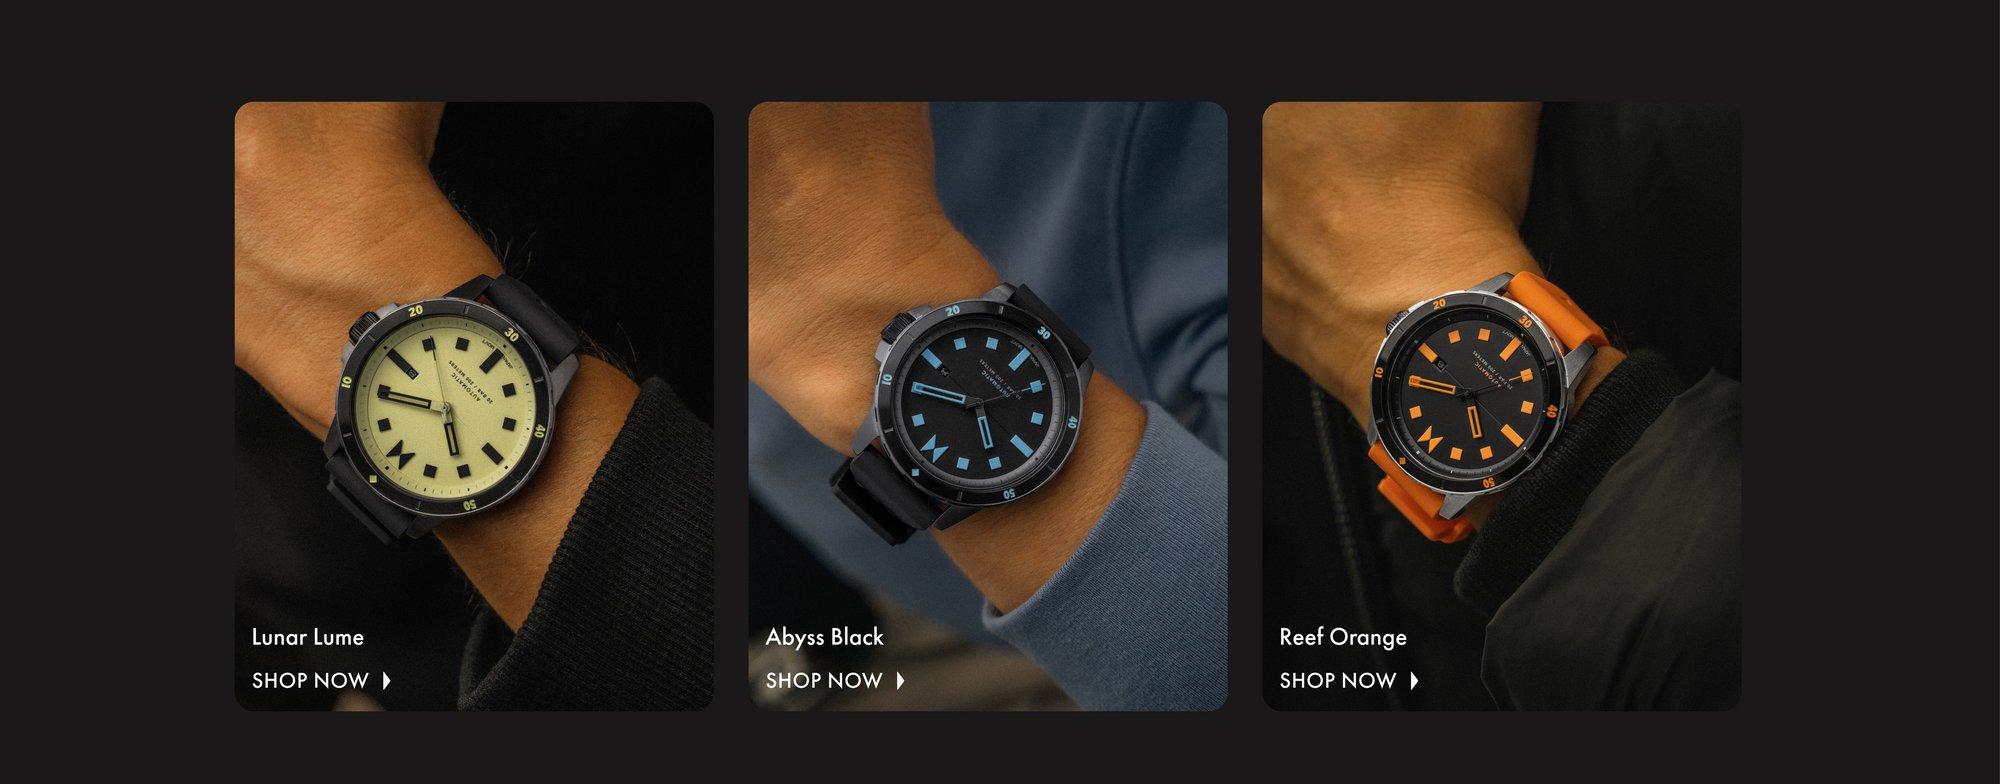 MVMT minimal sport watches in lunar lume, abyss black, and reef orange